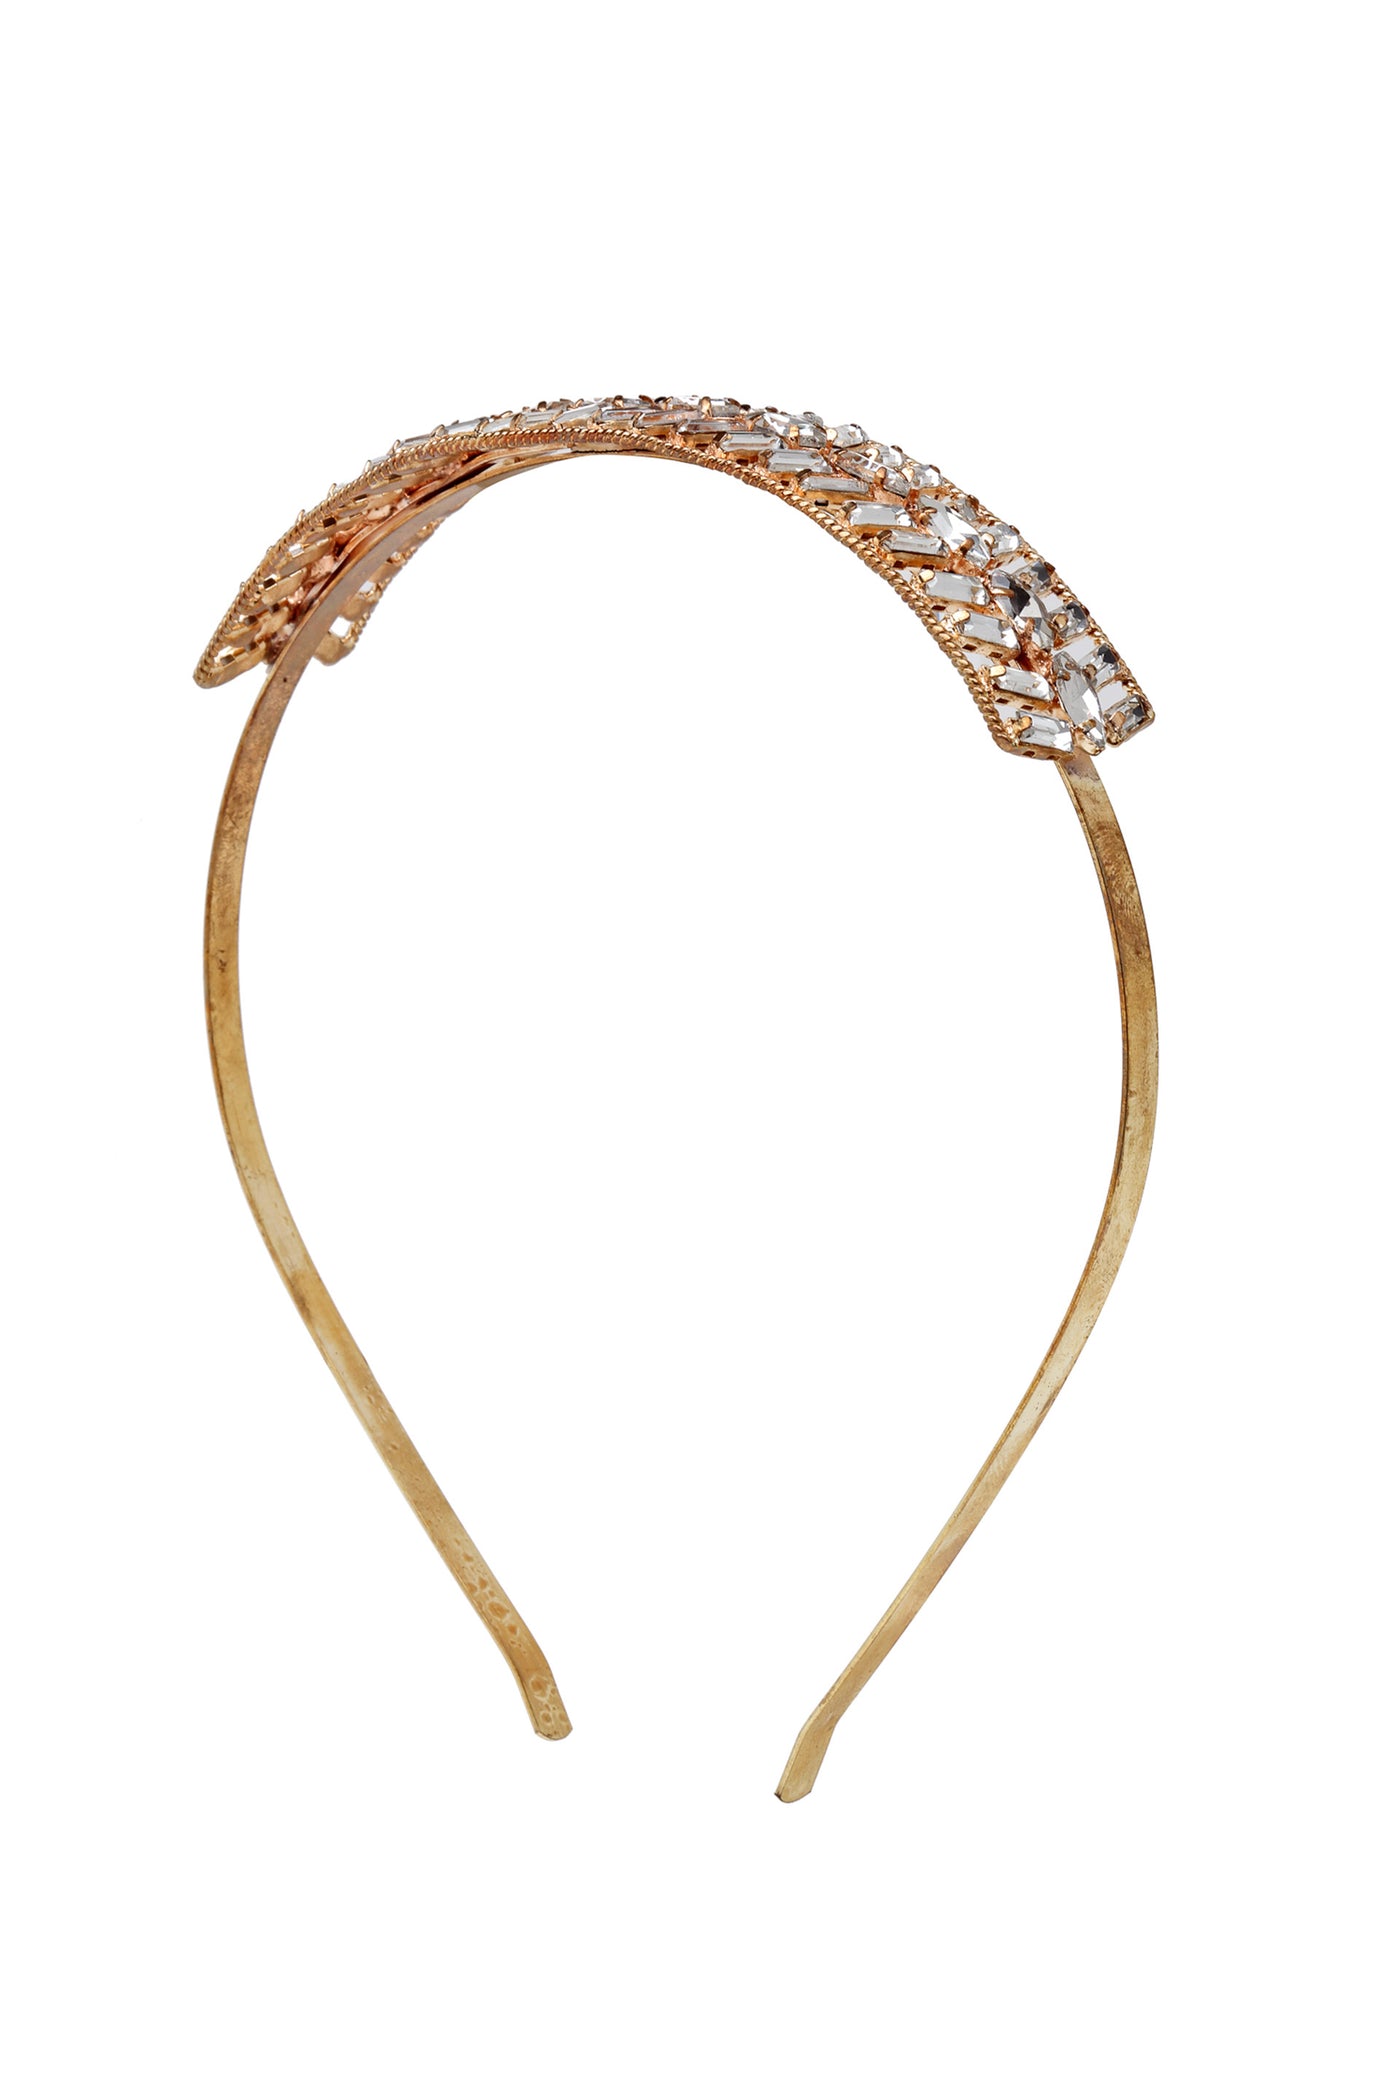 Bijoux by priya chandna Lavender Hair Band crystal and rose gold fashion accessories indian designer wear online shopping melange singapore